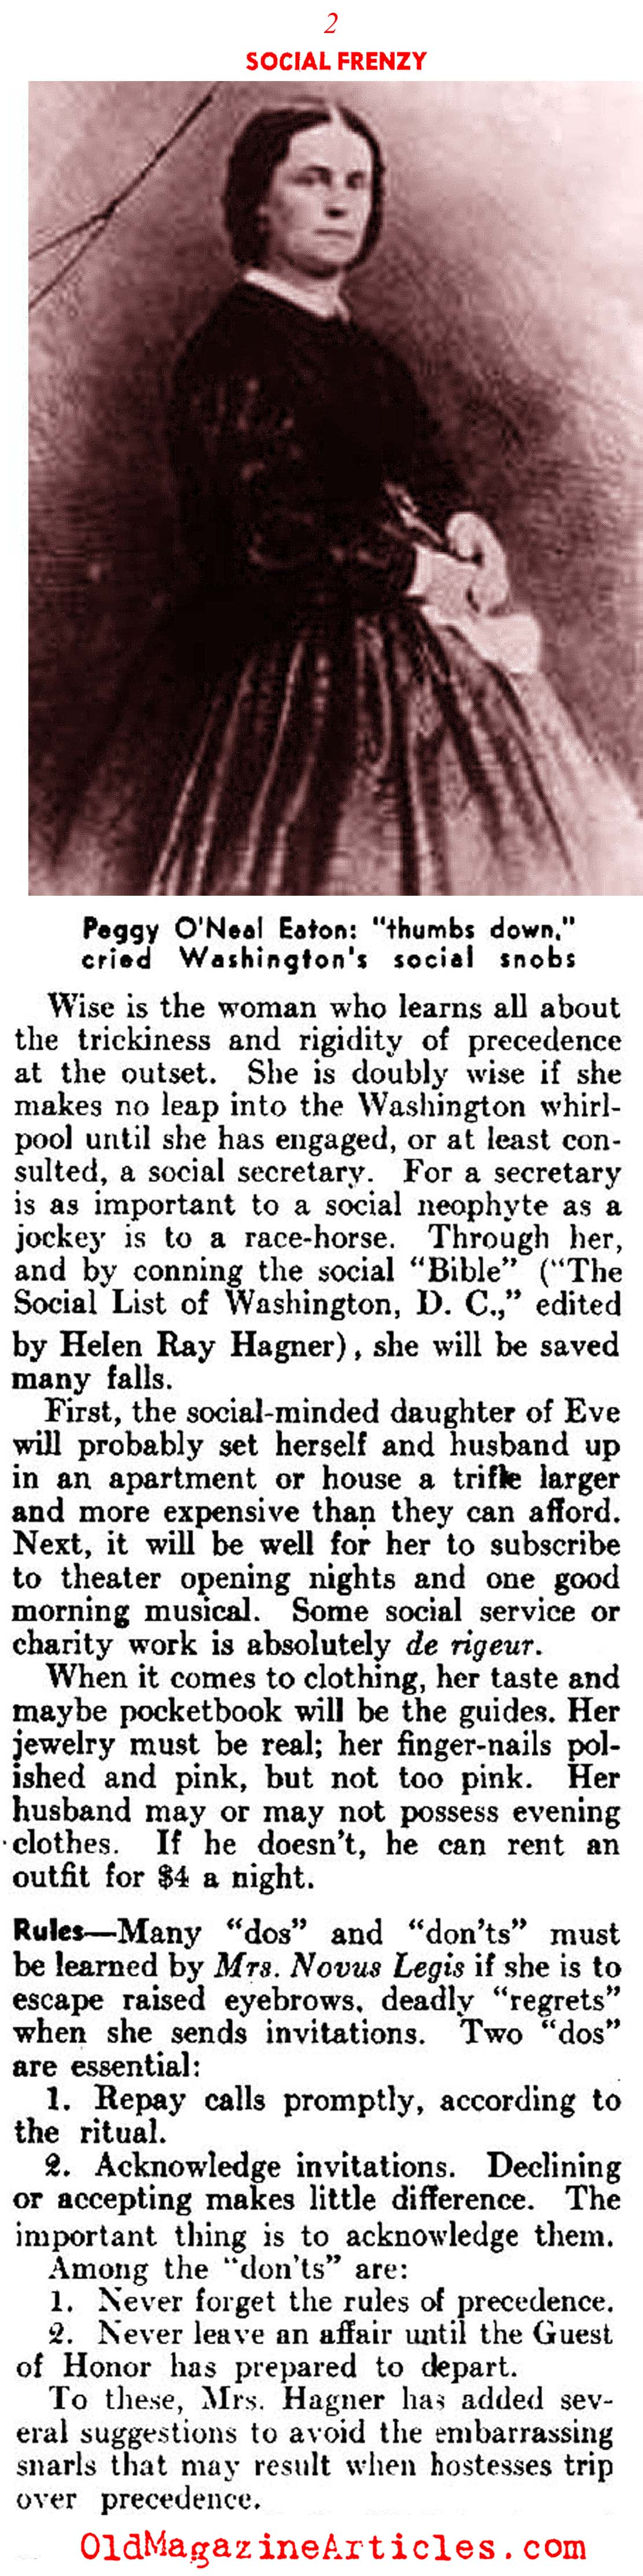 Social Washington During the Depression (Literary Digest, 1937)